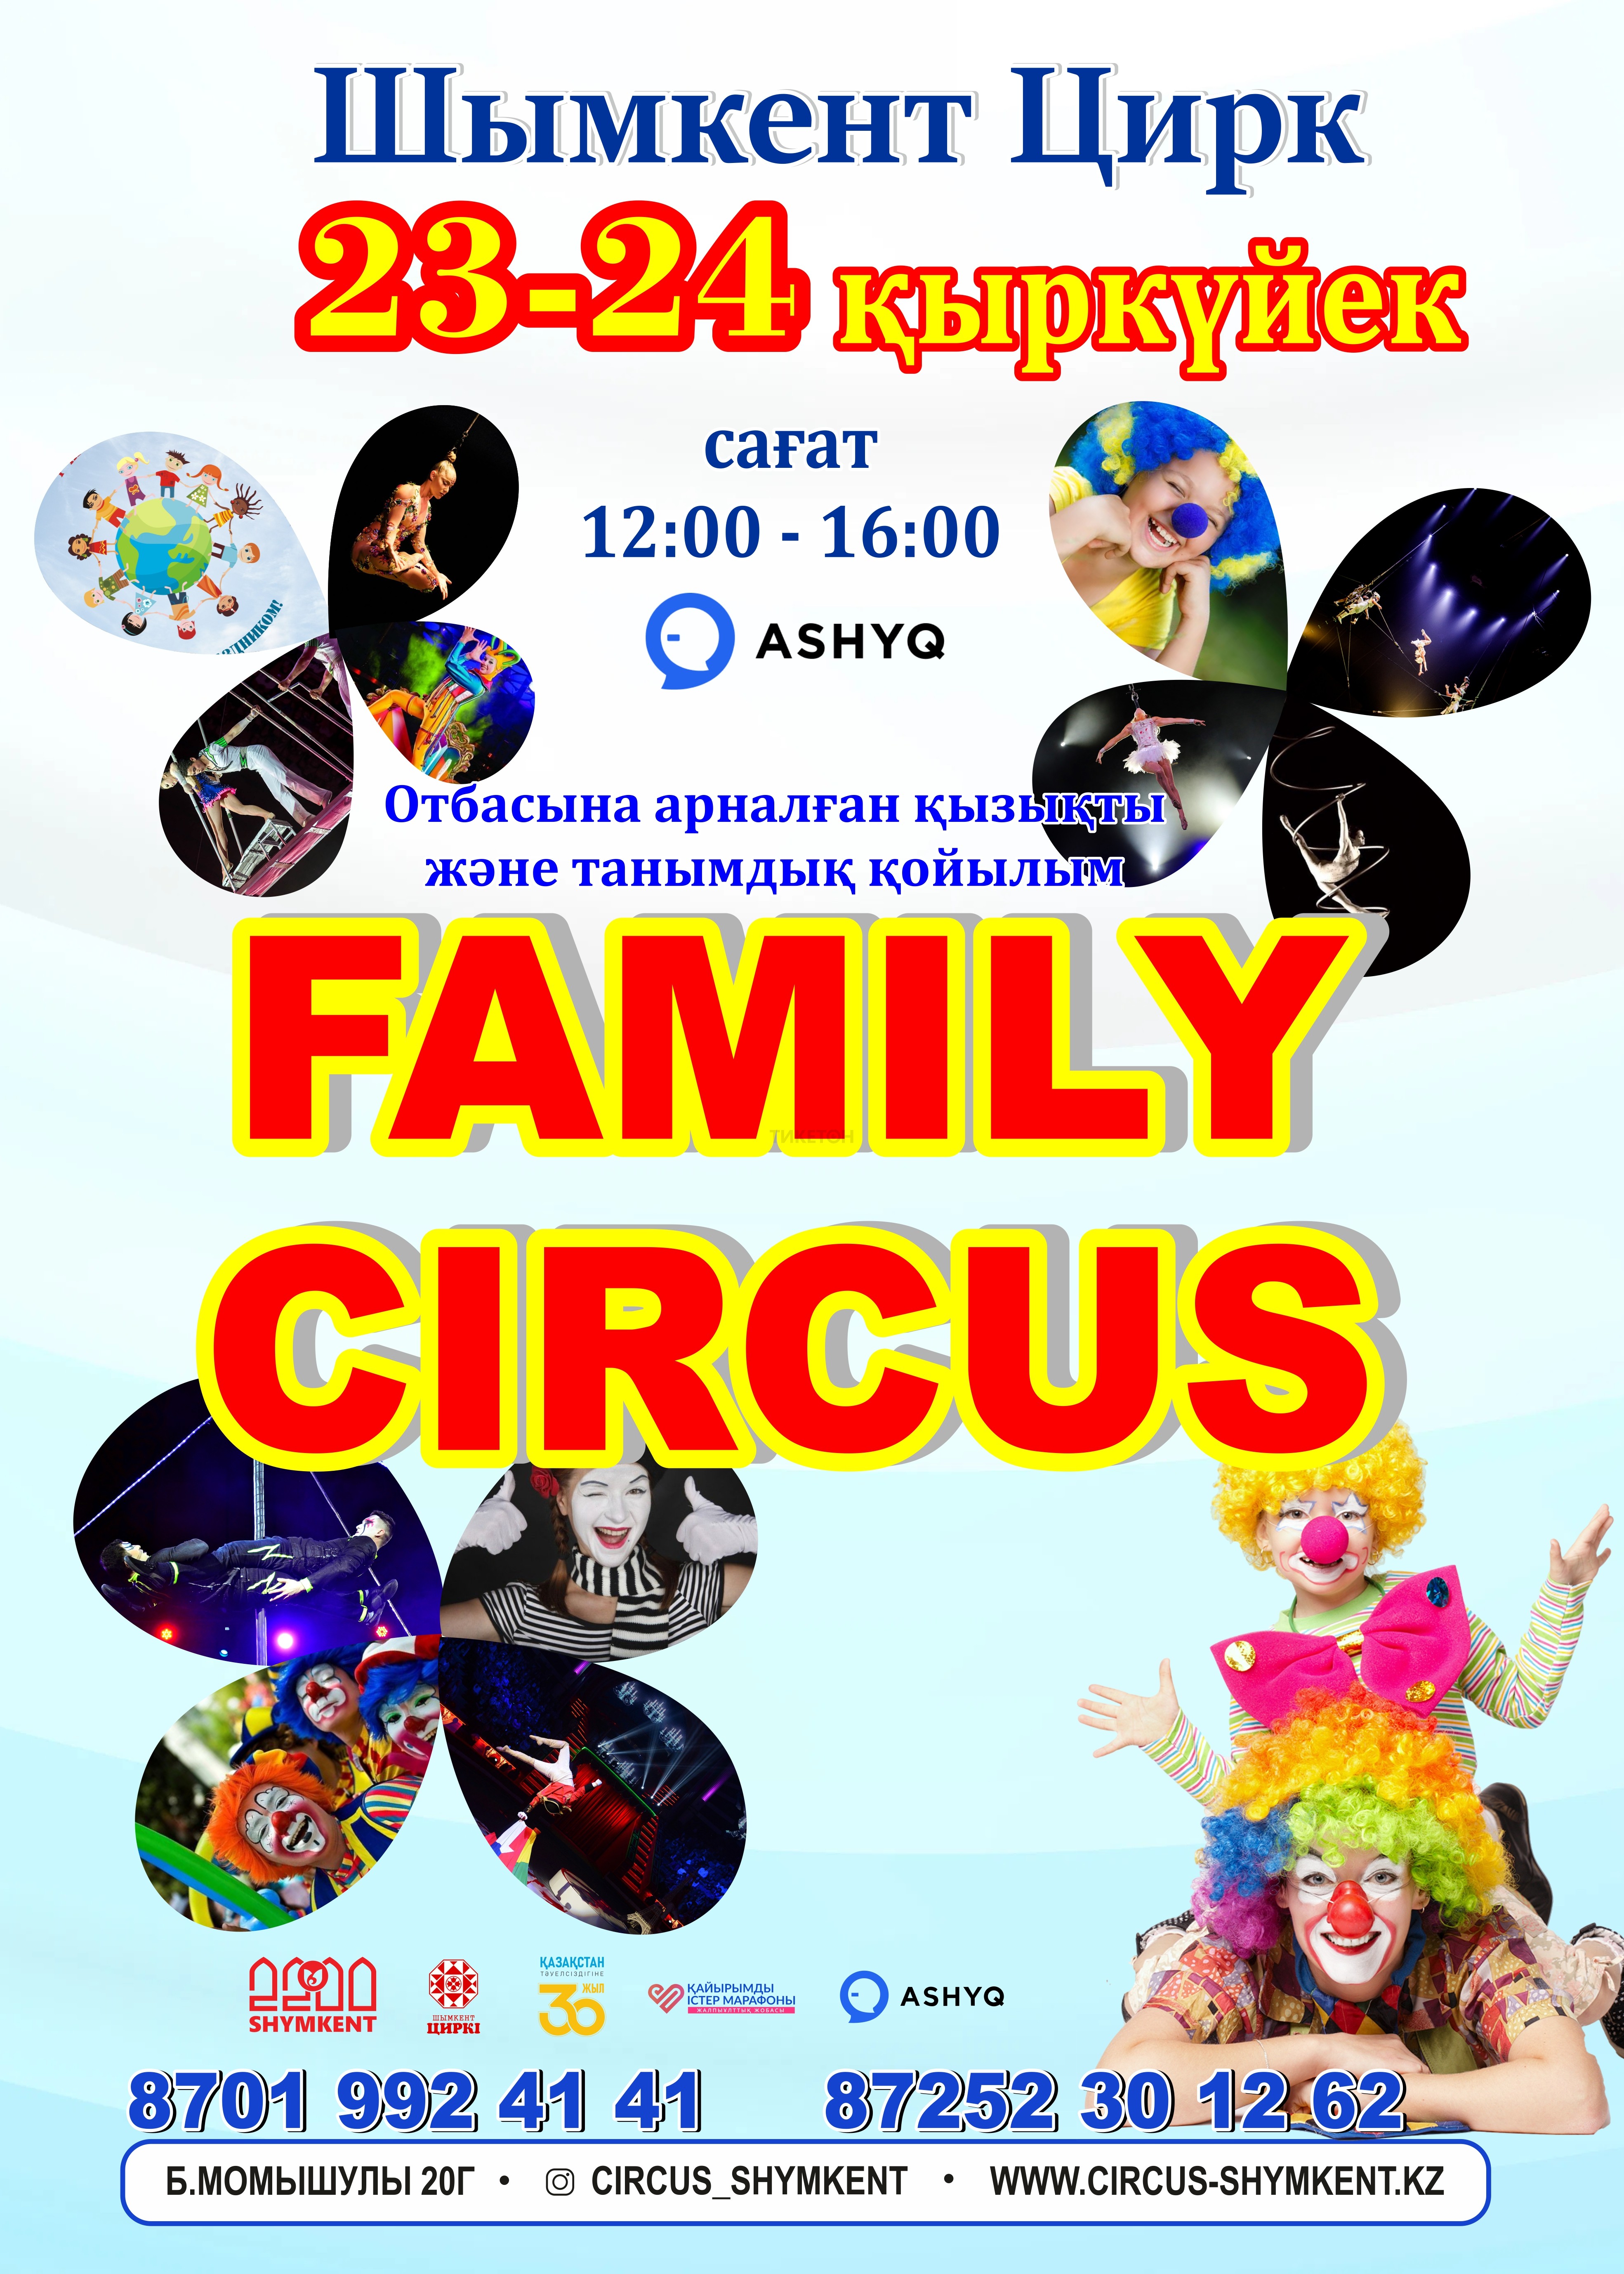 Shymkent Circus